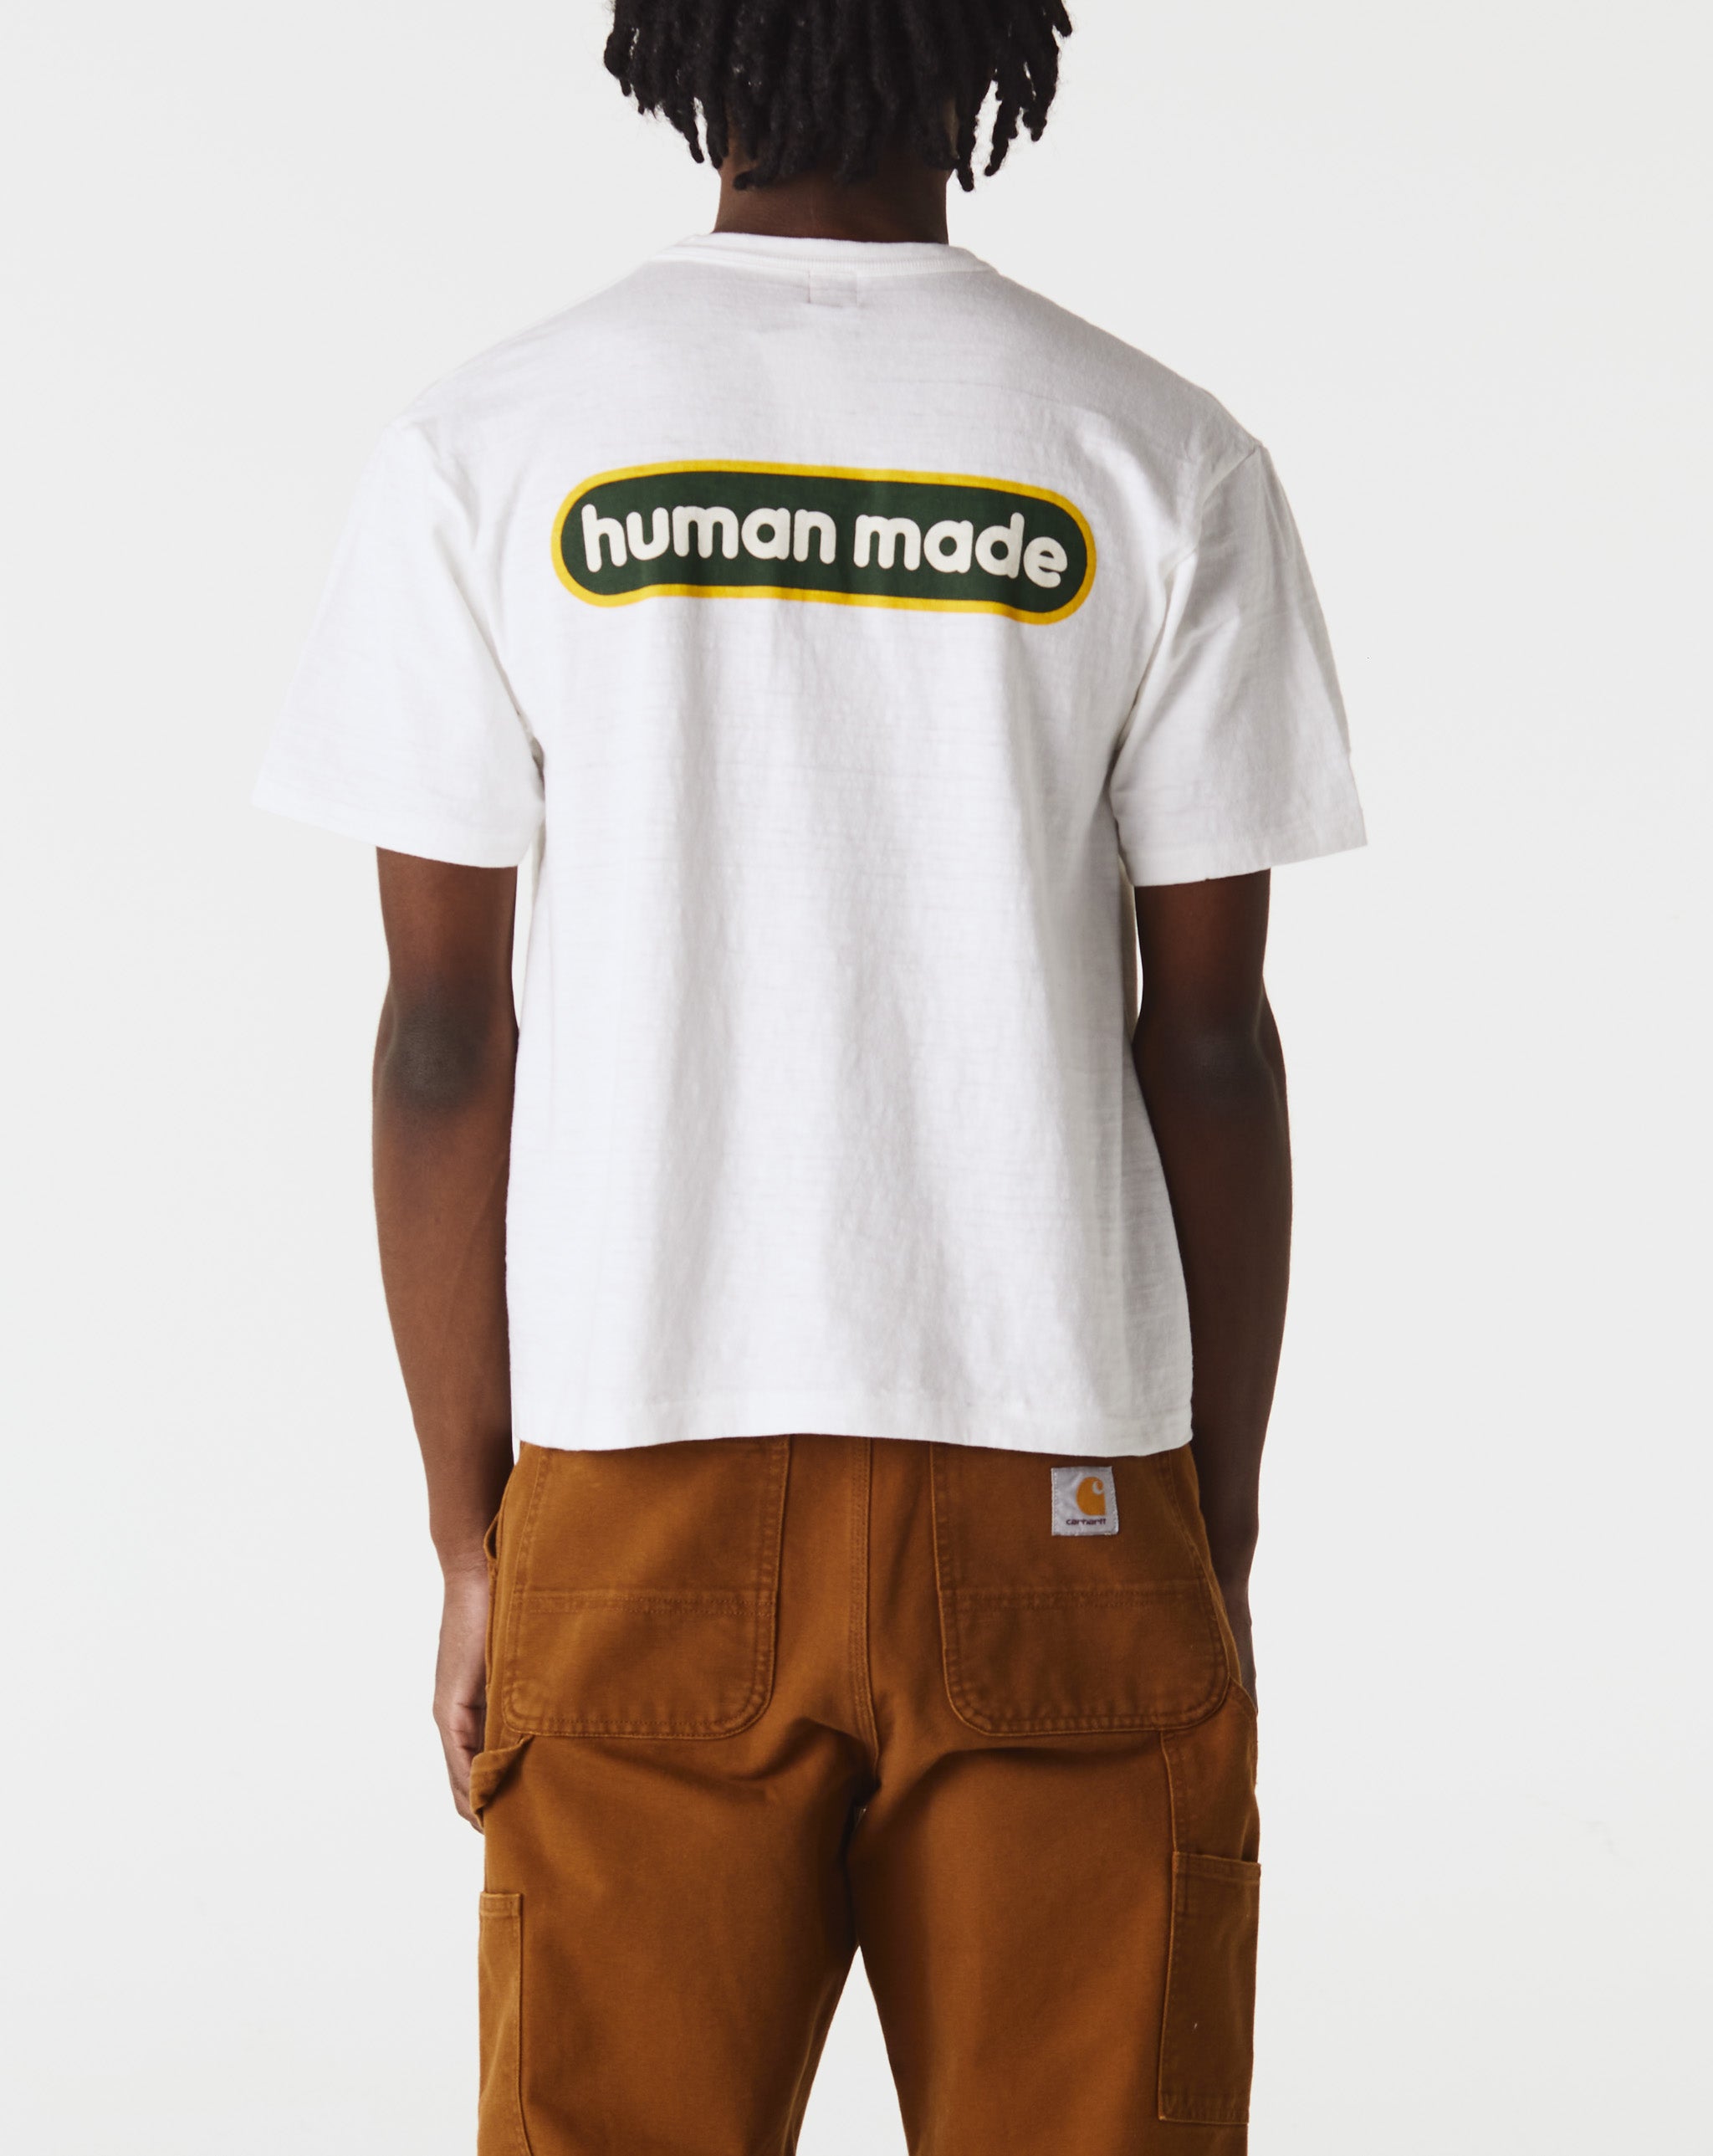 Human Made Graphic T-Shirt #08  - XHIBITION